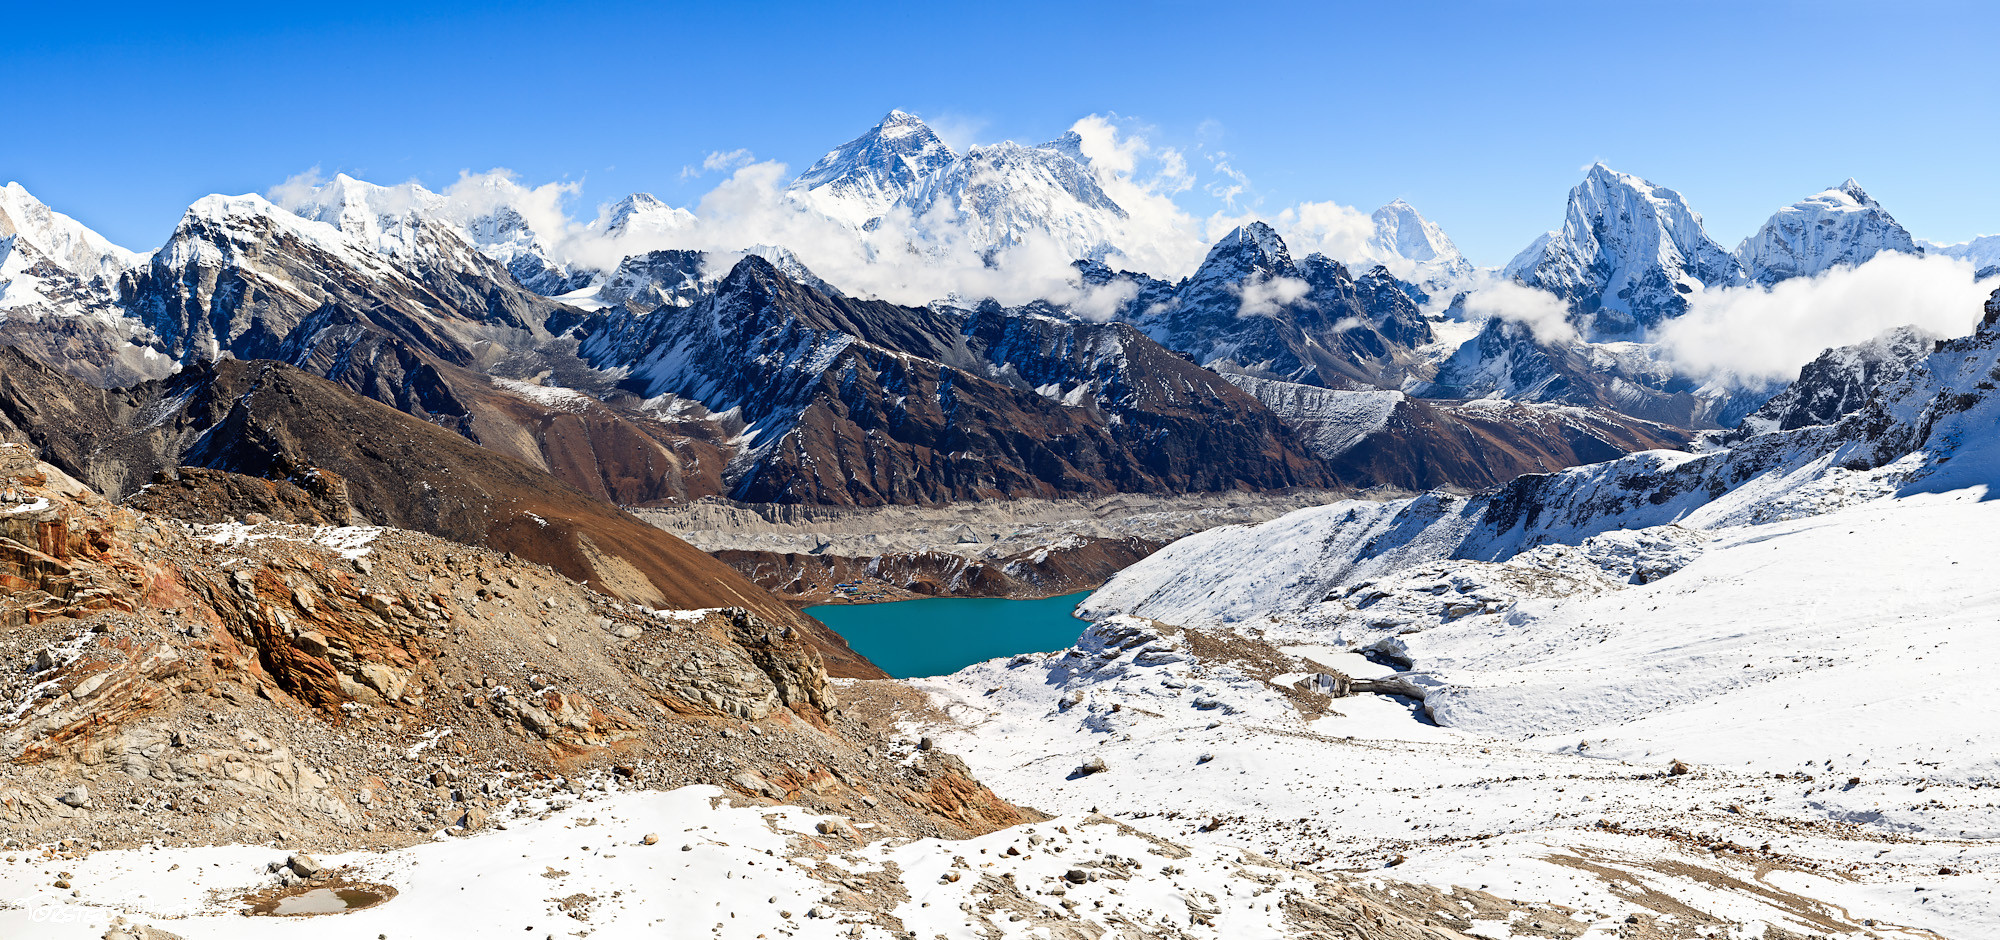 Everest-chola-pass 